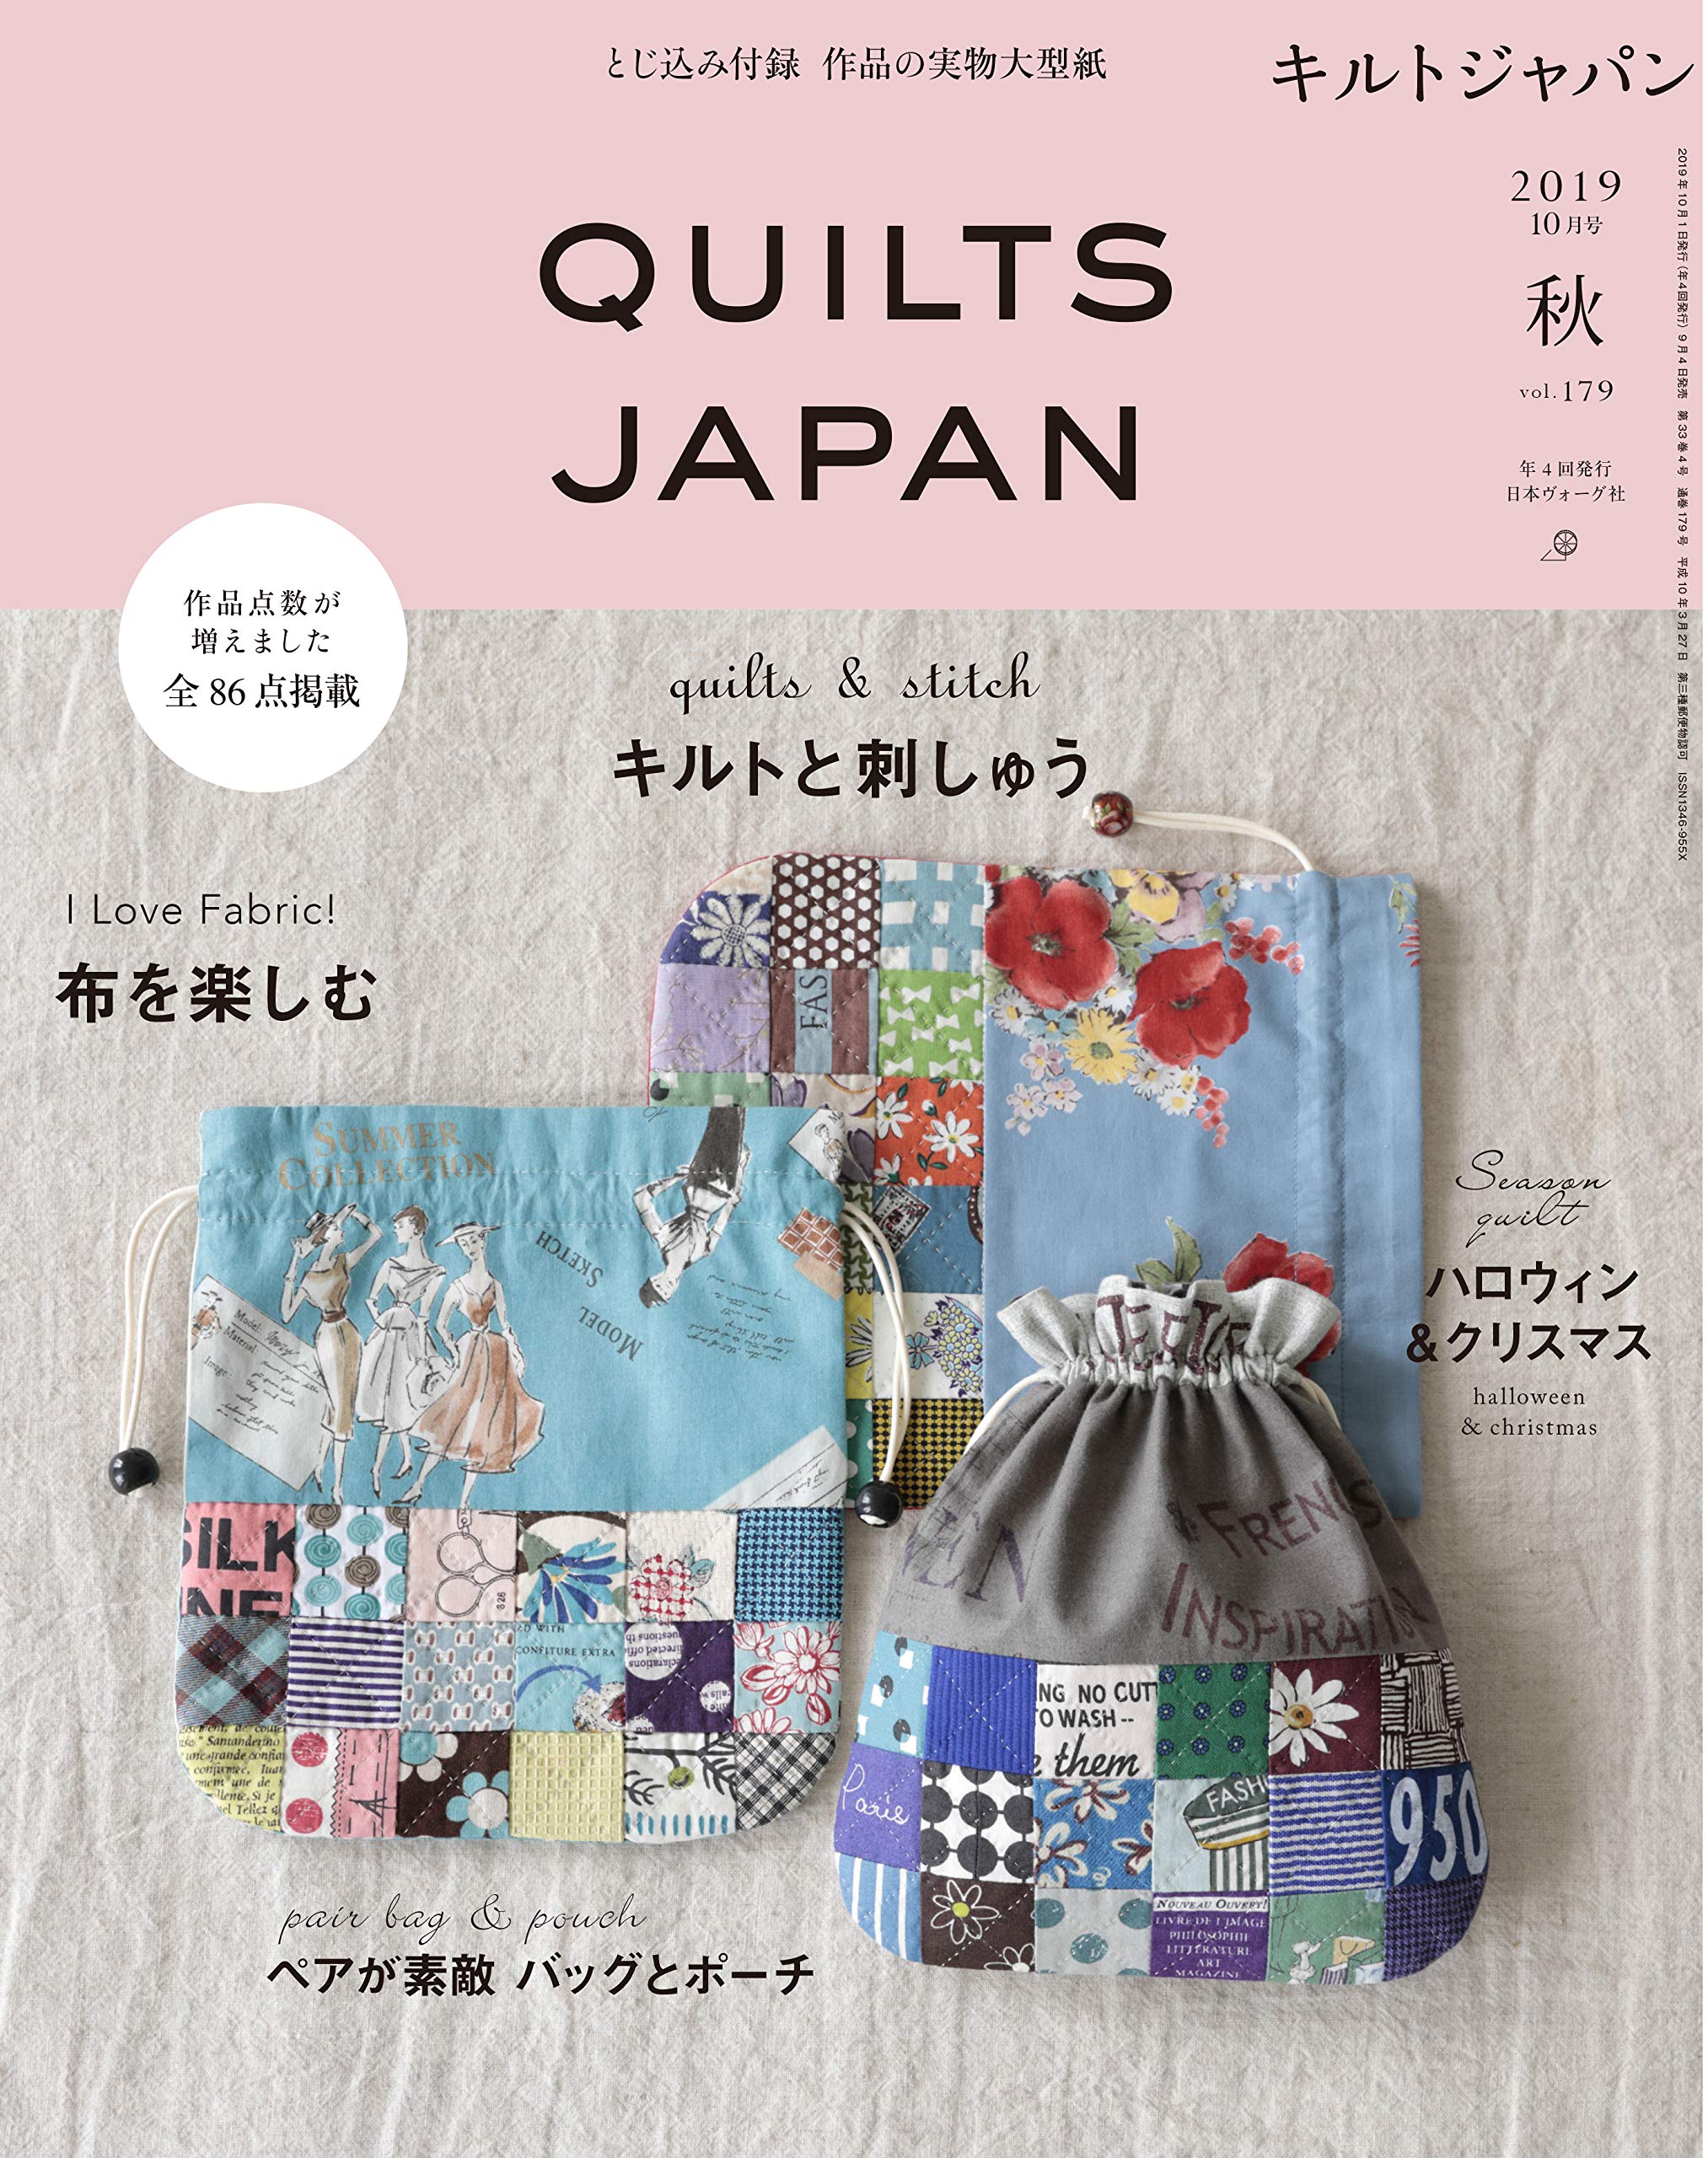 Quilt Japan October 2019 Fall